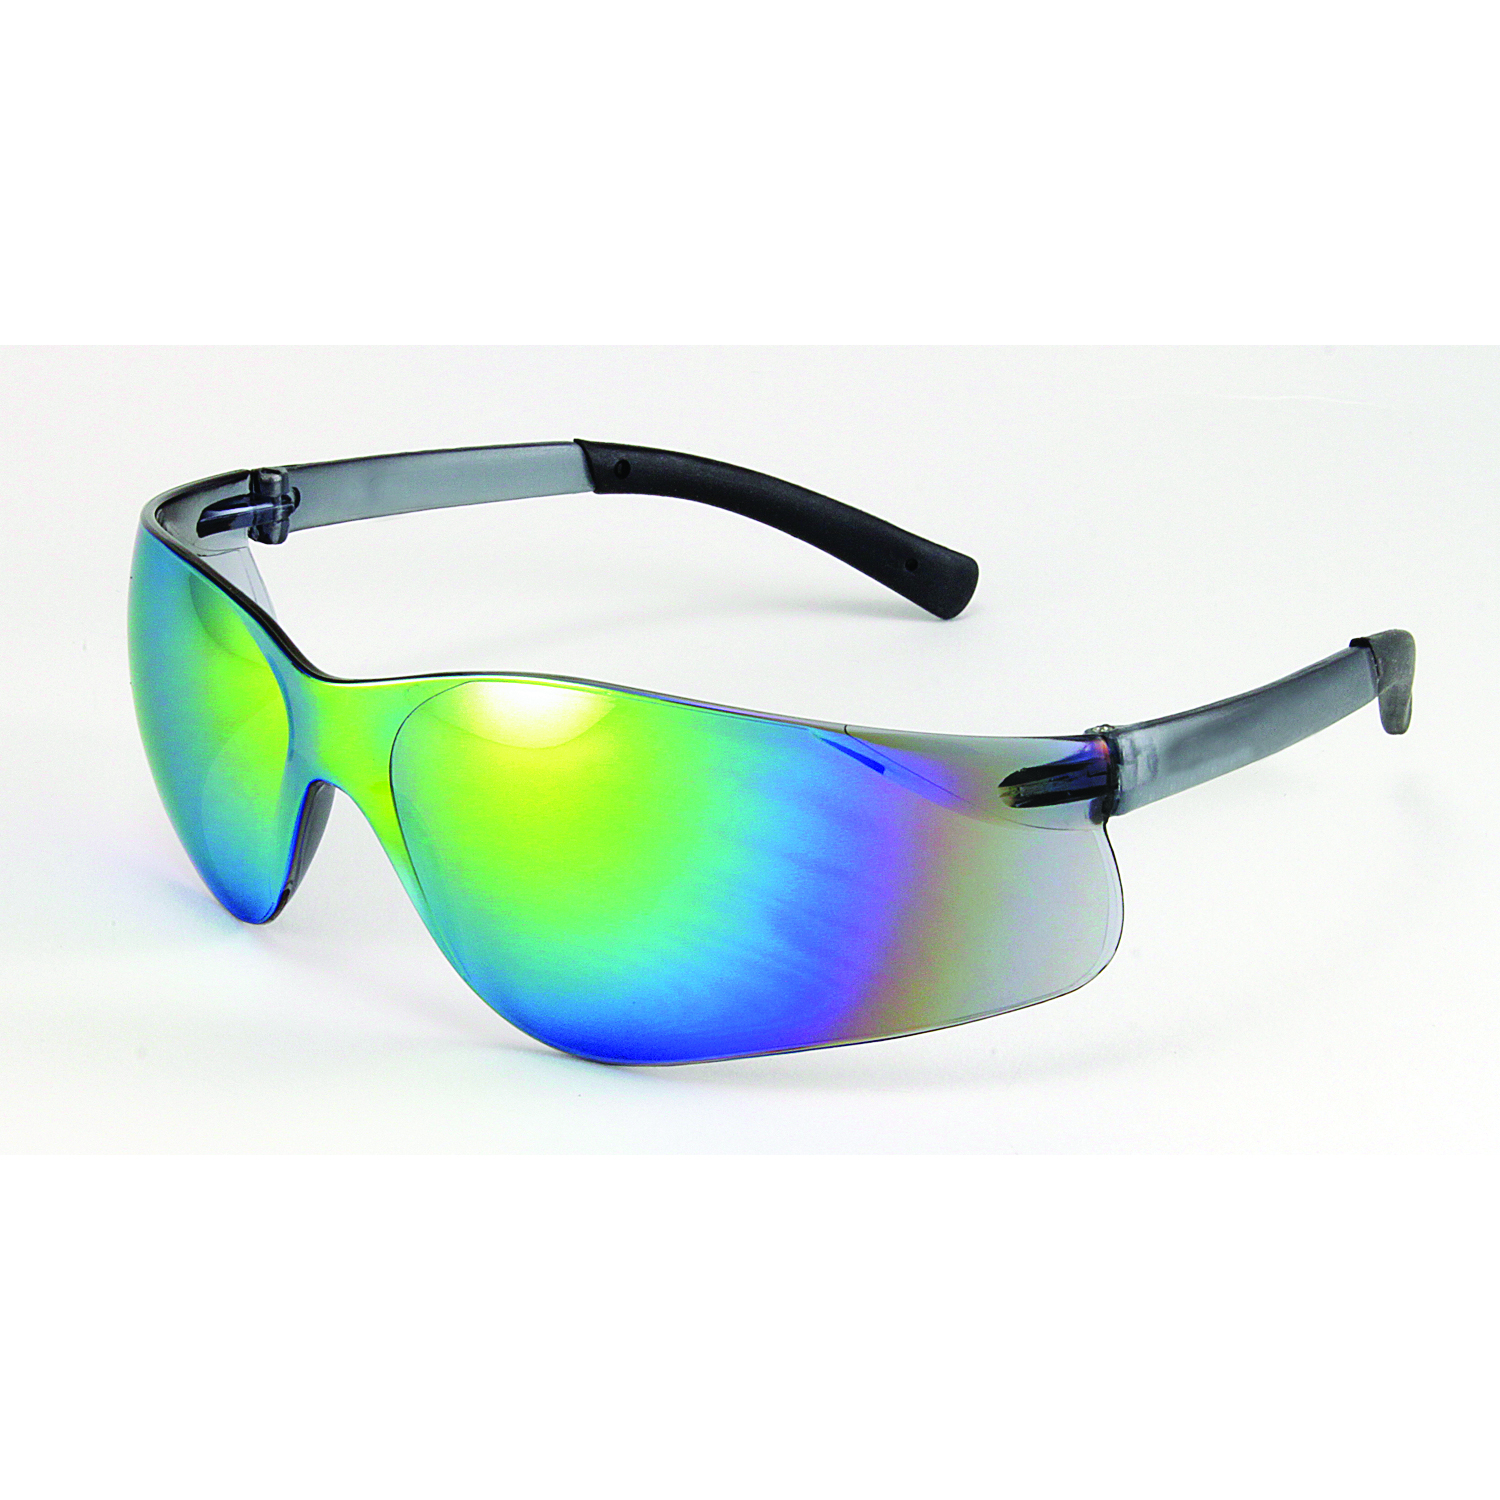 Sportster Safety Glasses, Black Frame, Rad Yellow Mirror Lens